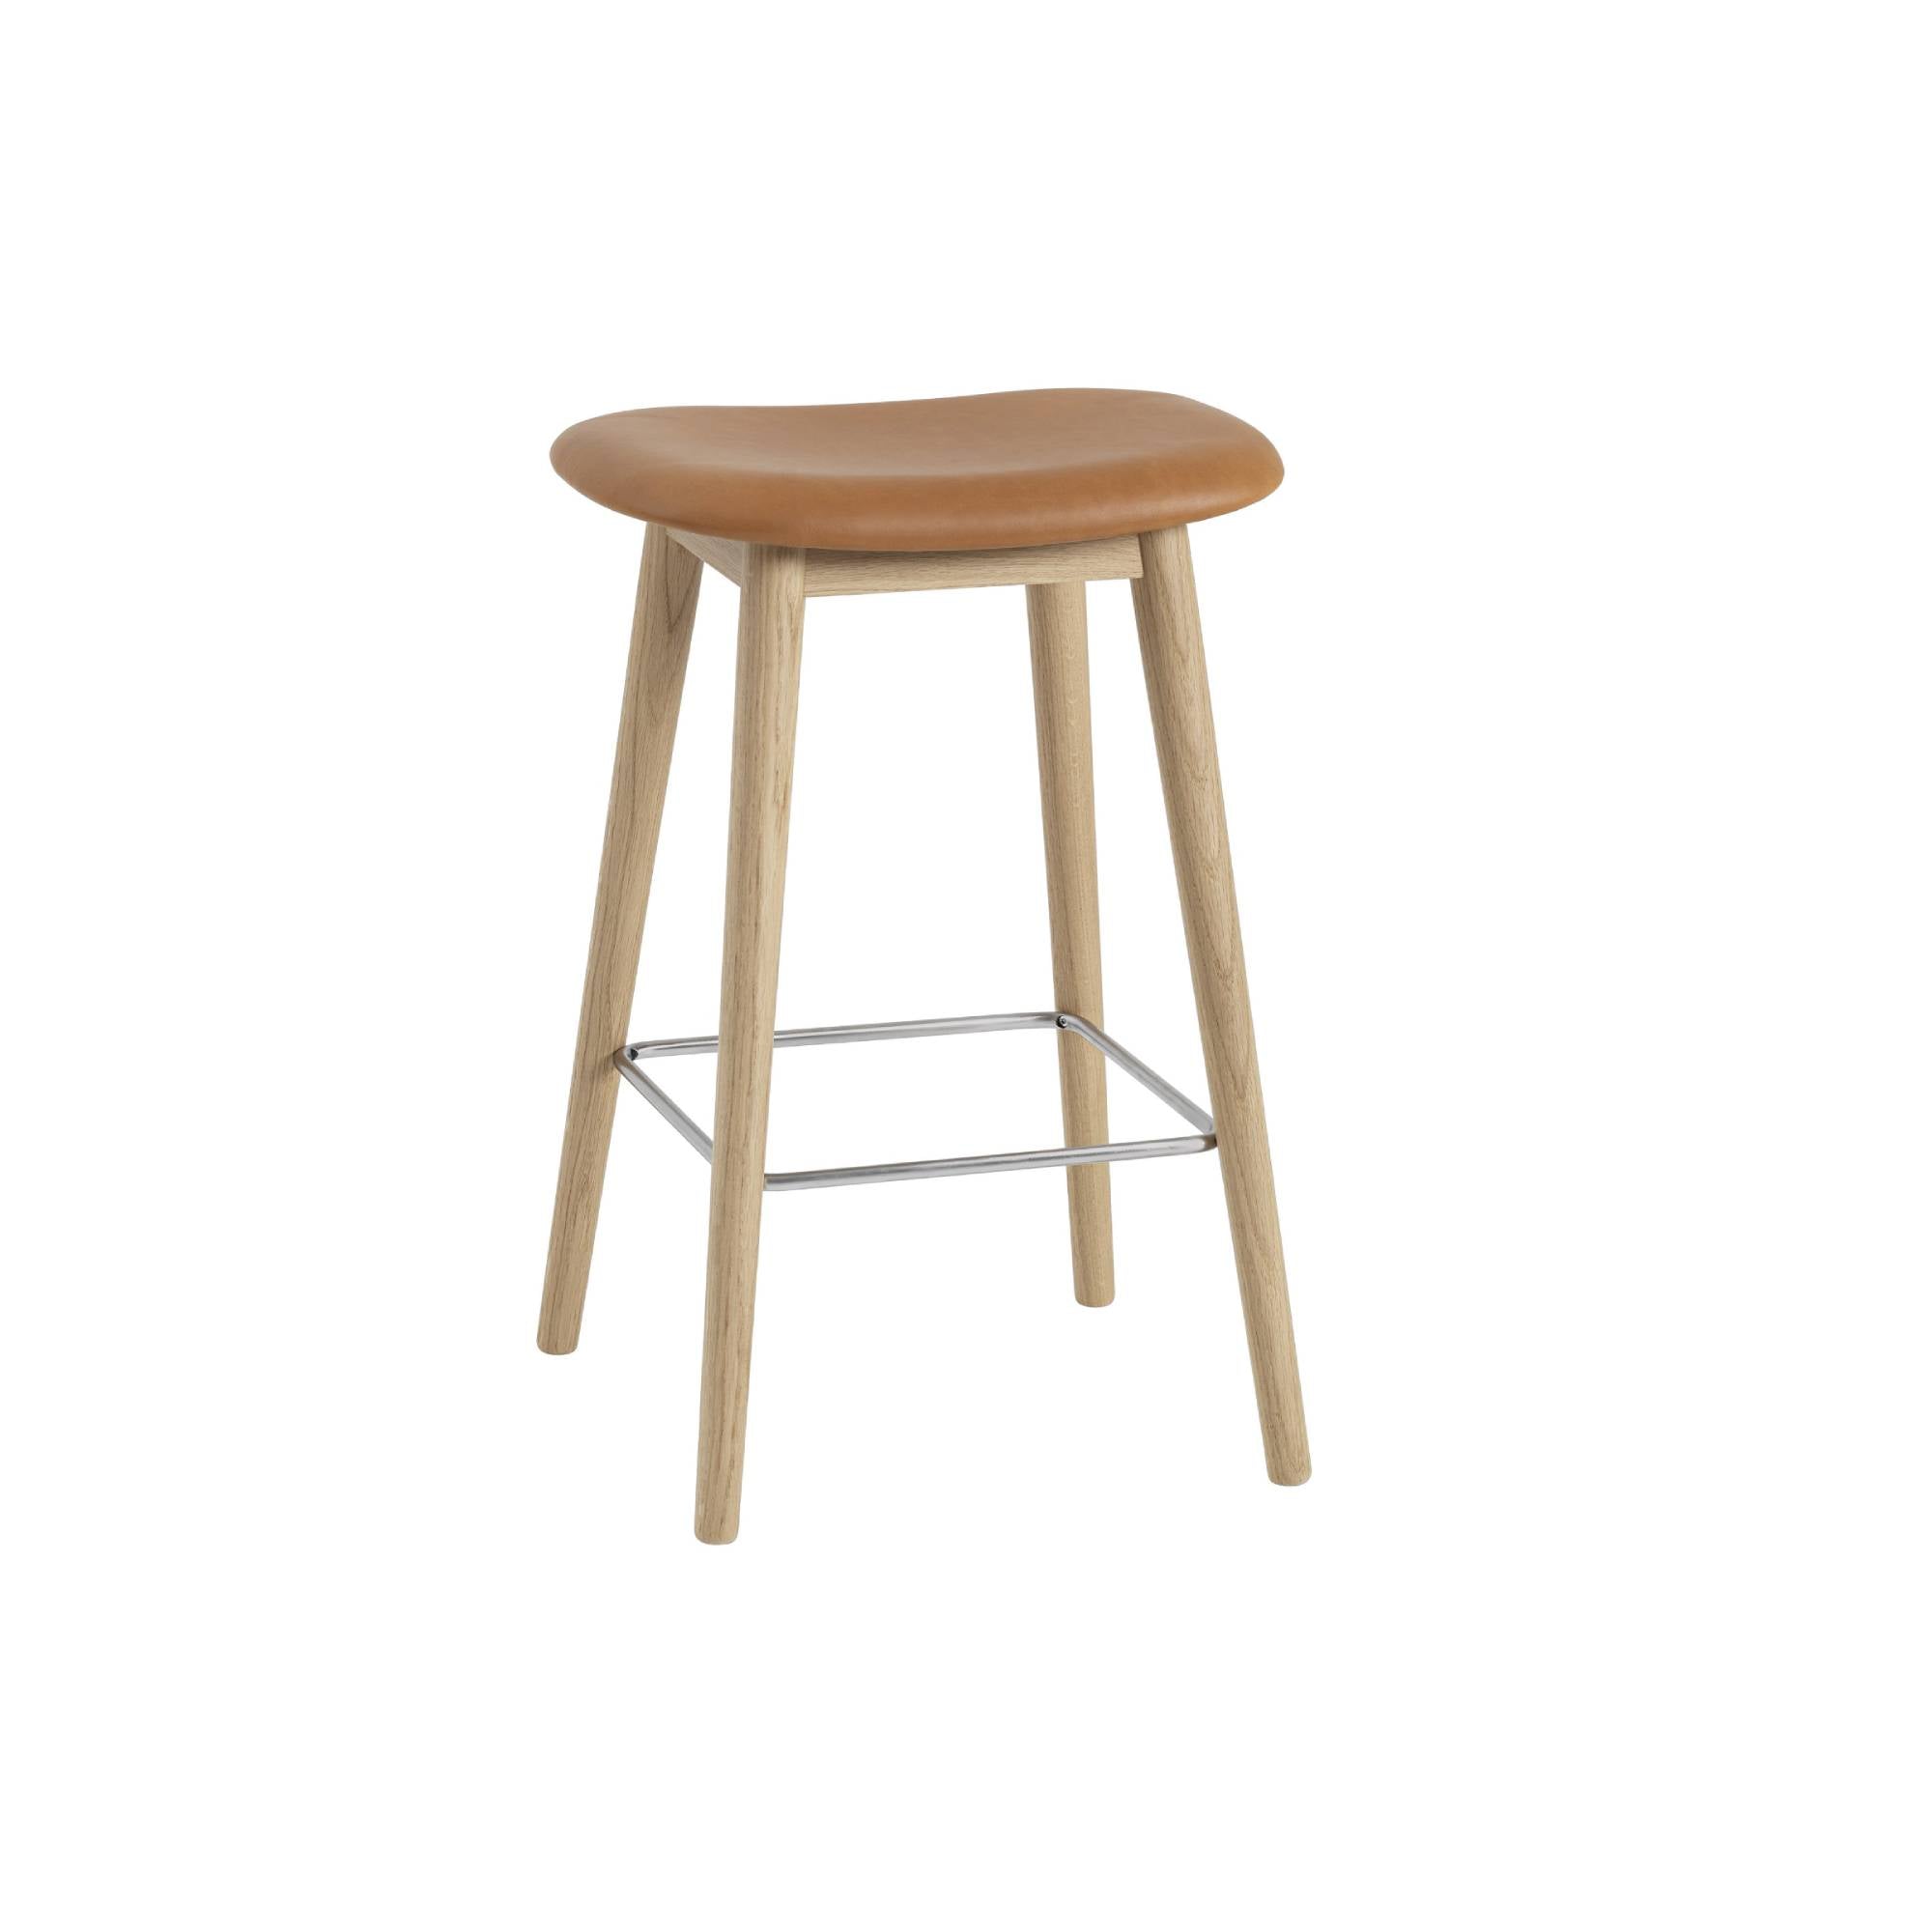 Fiber Bar + Counter Stool: Wood Base + Upholstered + Counter + Oak